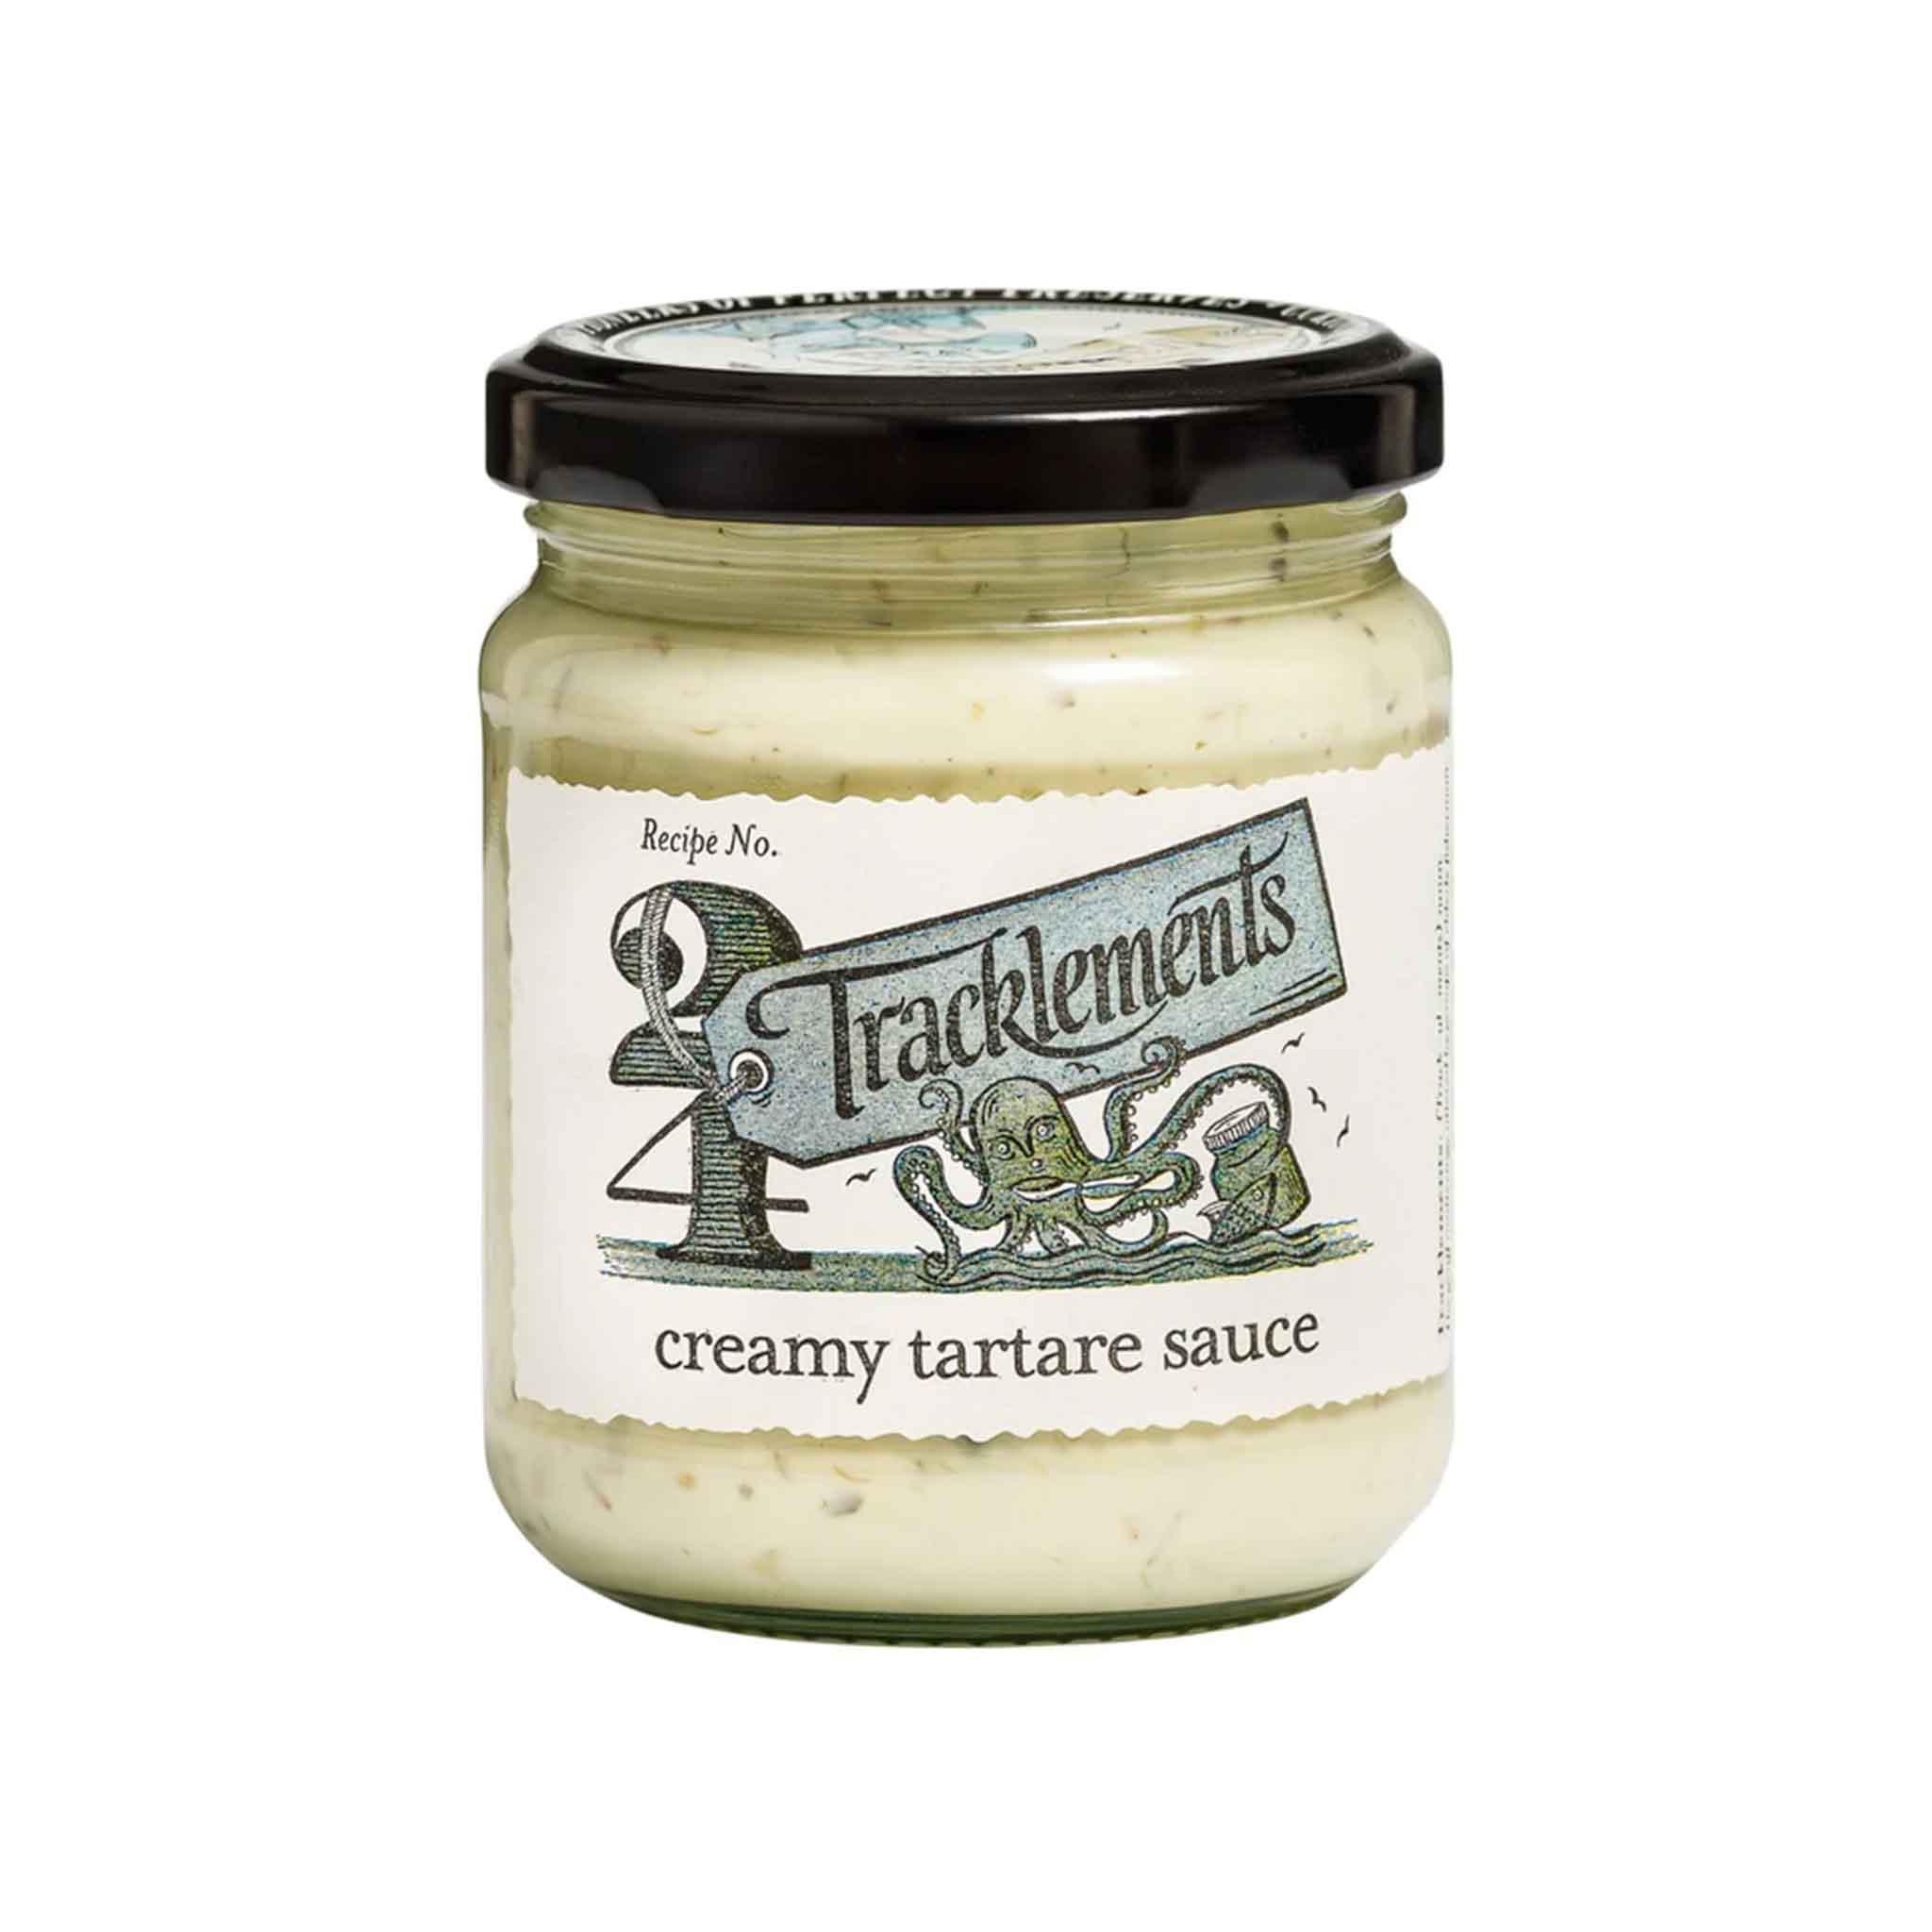 Tracklements Creamy Tartare Sauce in a Jar